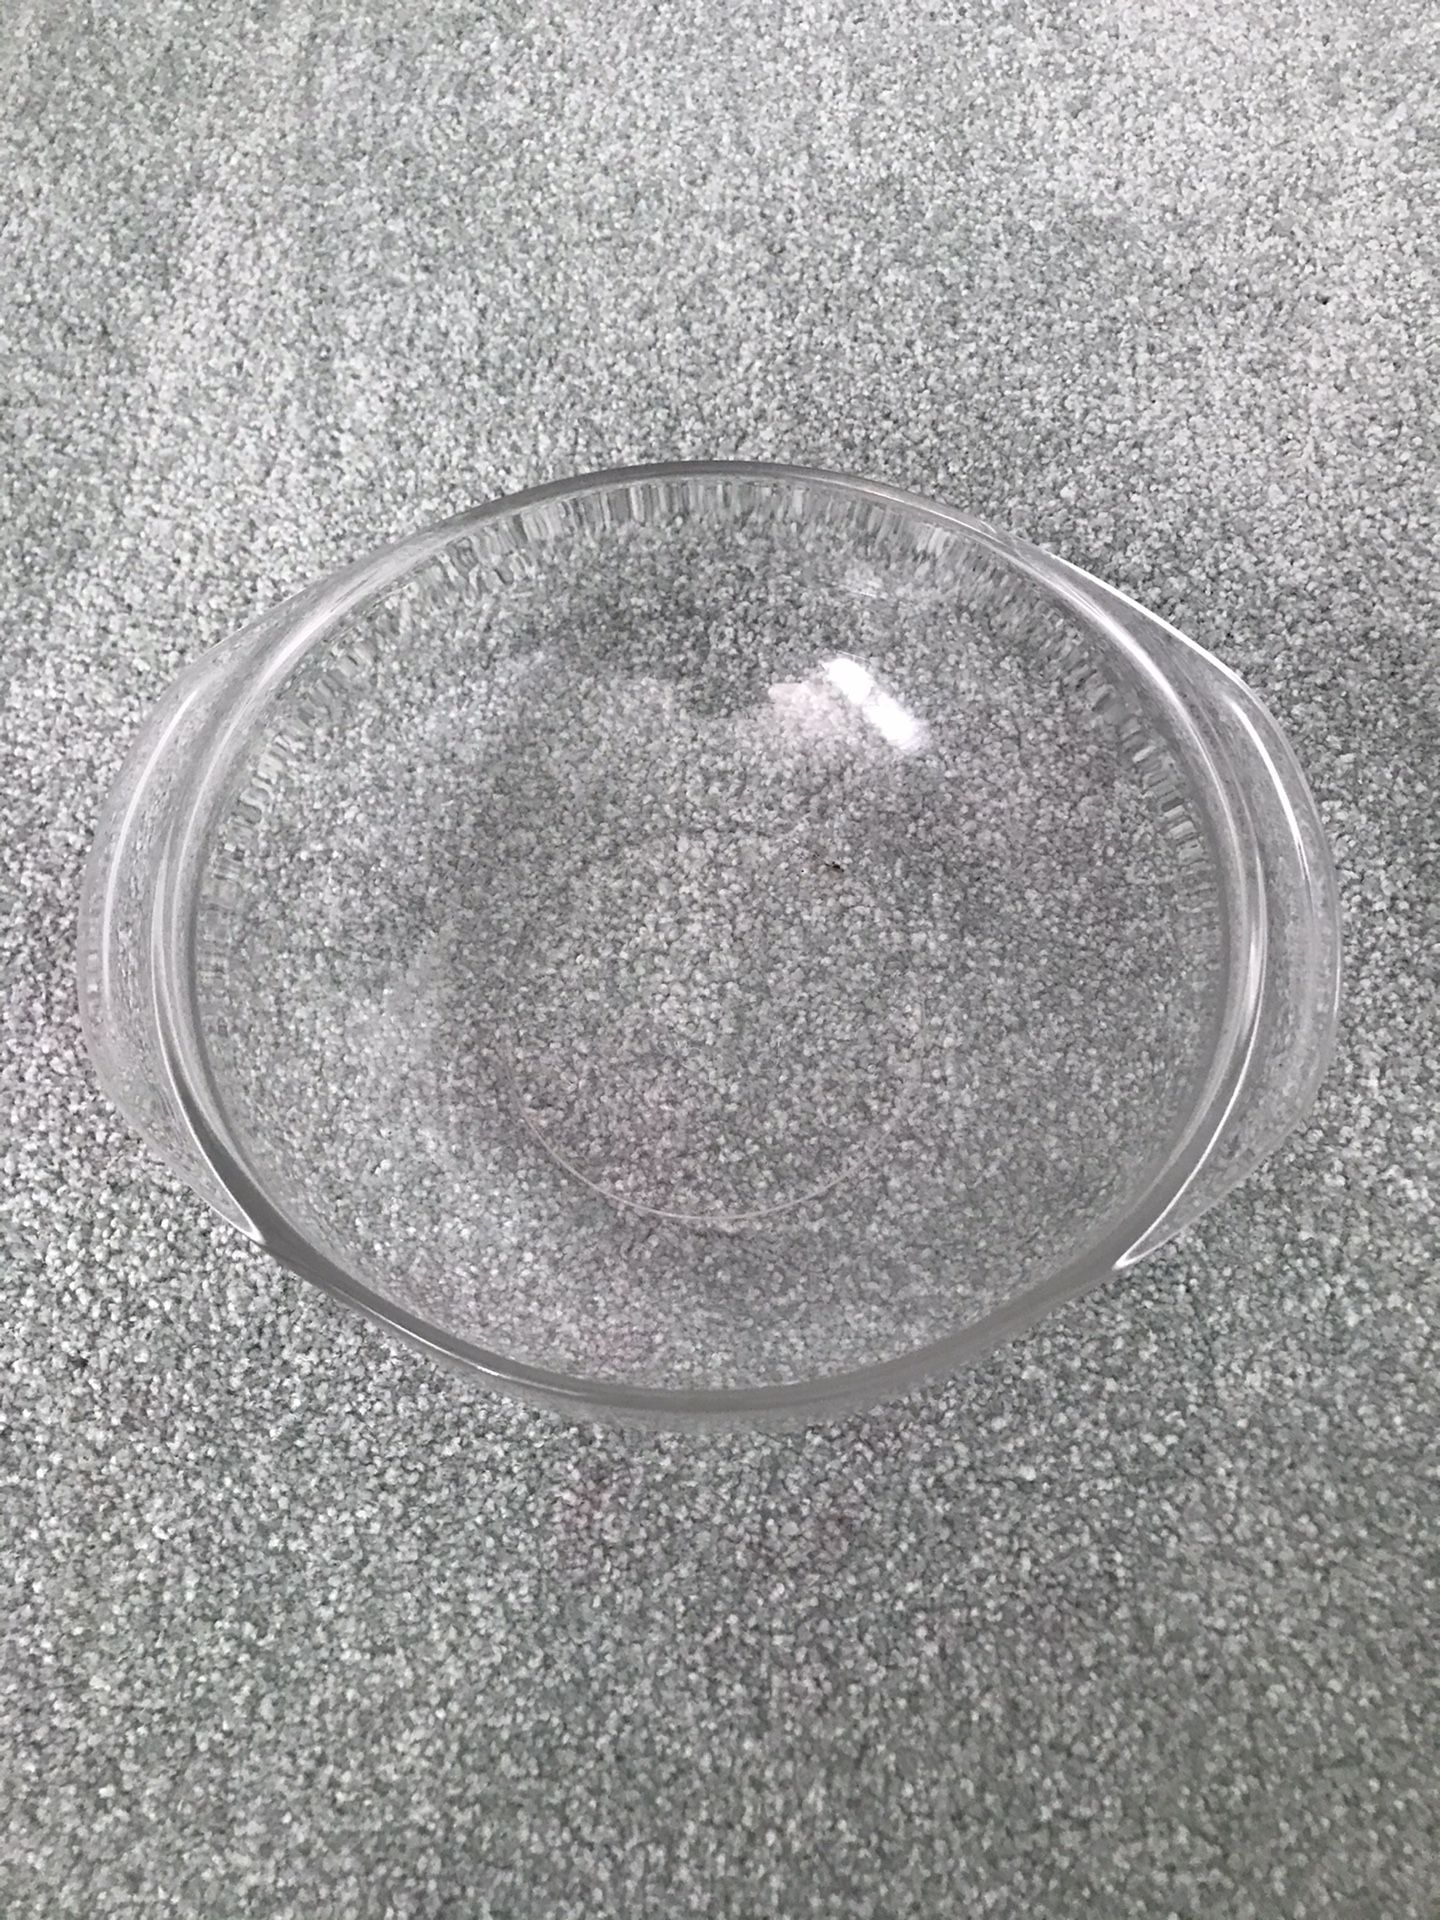 Pyrex casserole dish, Clear glass 8.5” x 3”round 